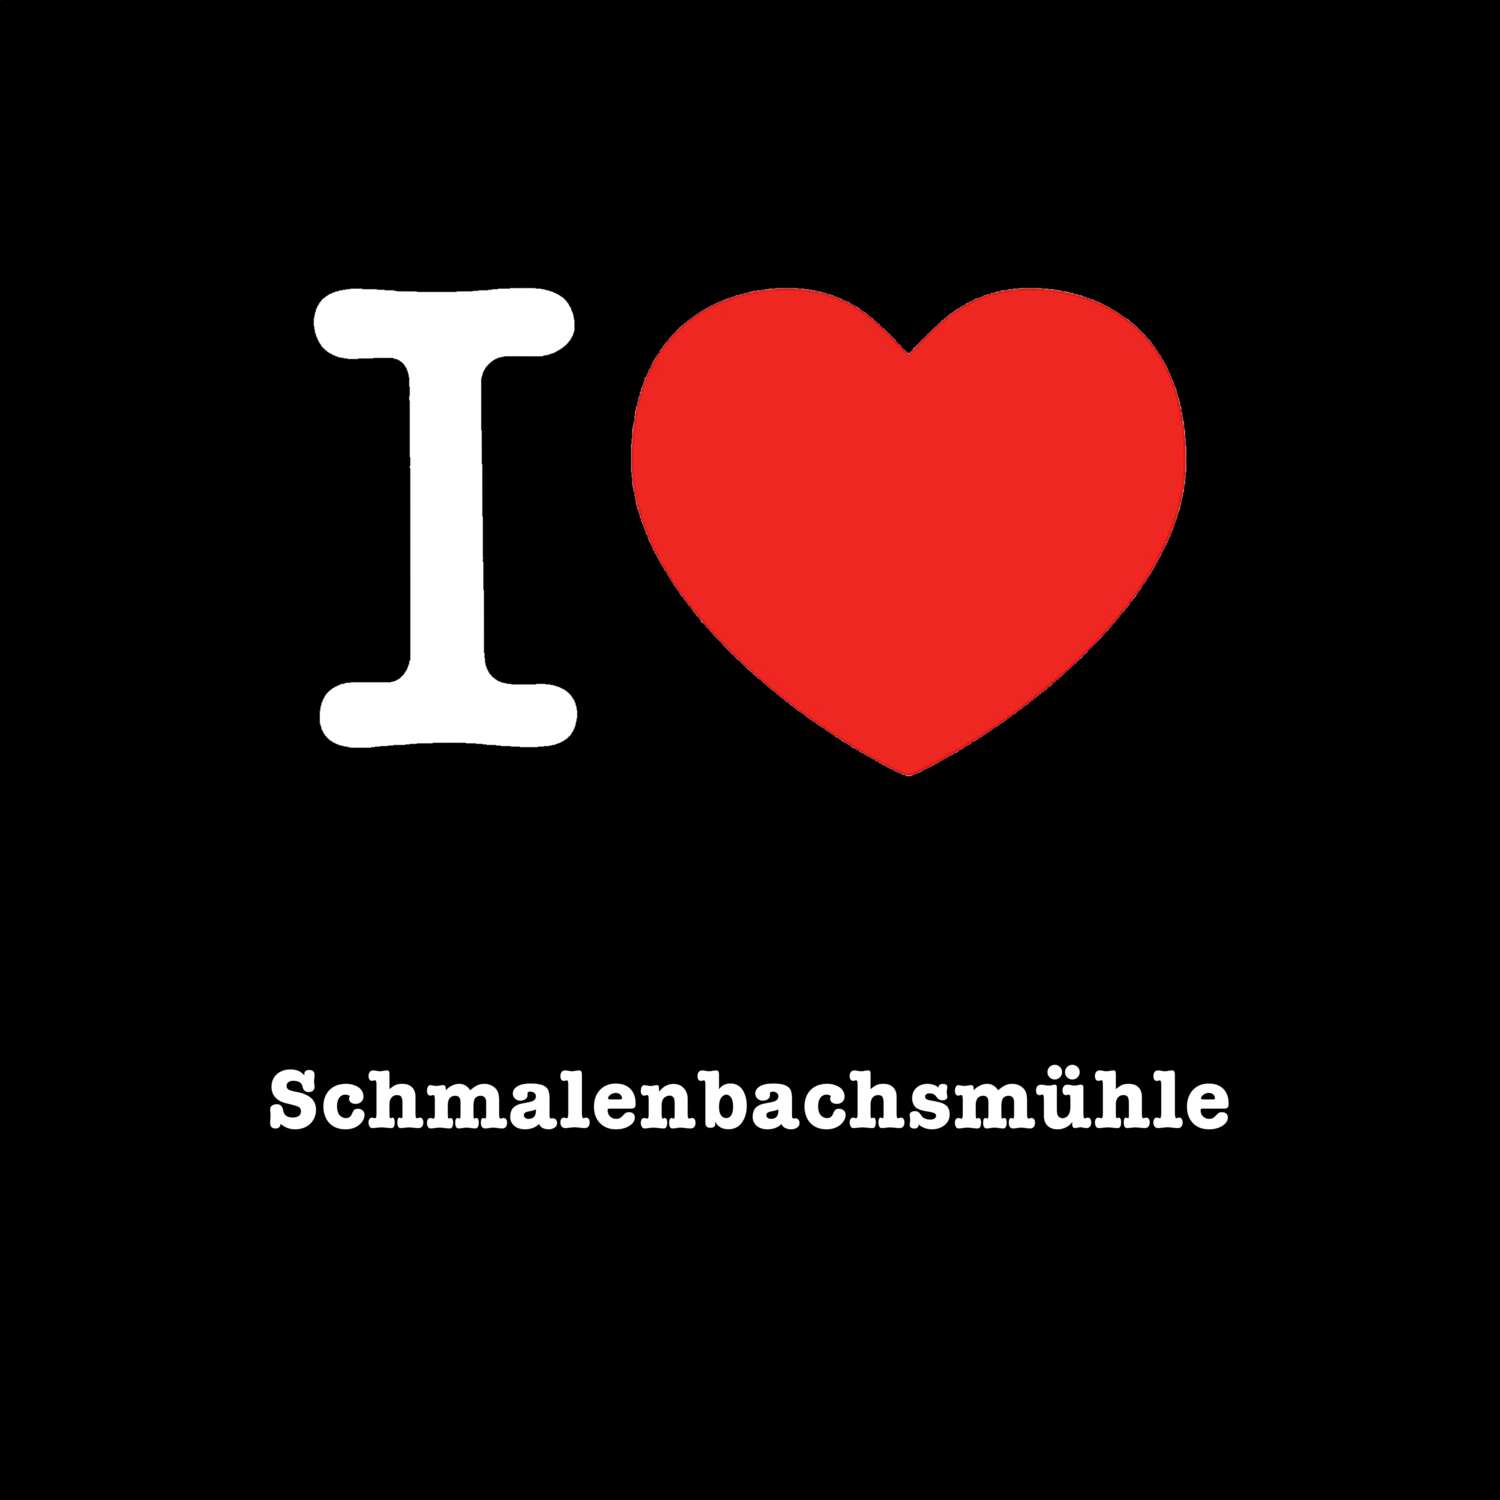 Schmalenbachsmühle T-Shirt »I love«